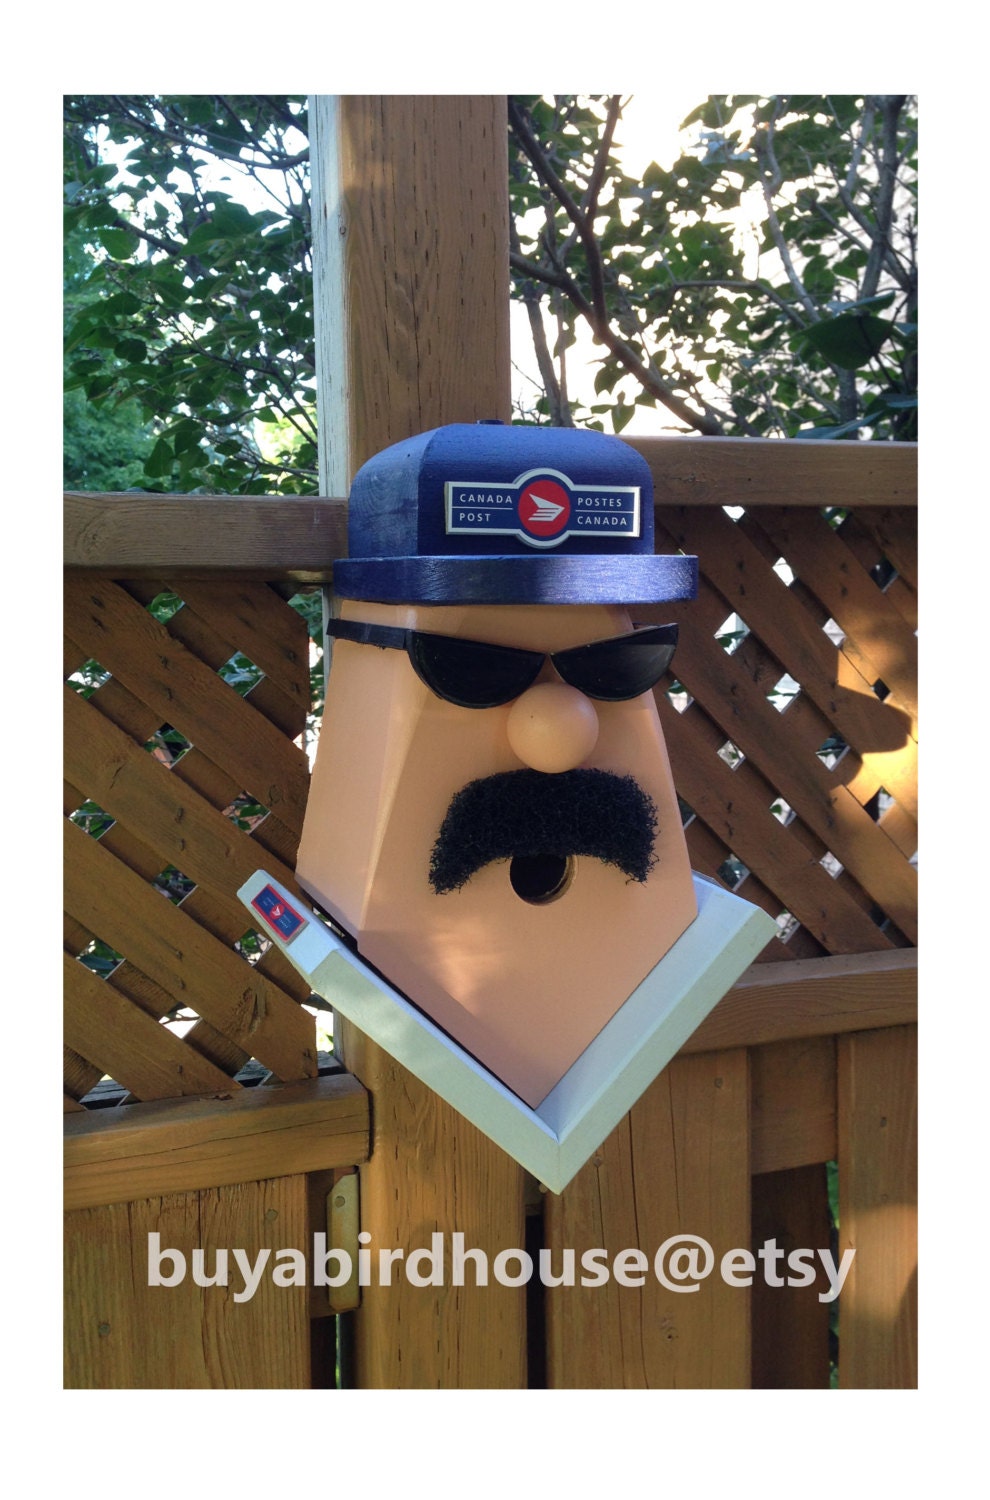 Canada Post " Mailman with Moustache" Birdhouse